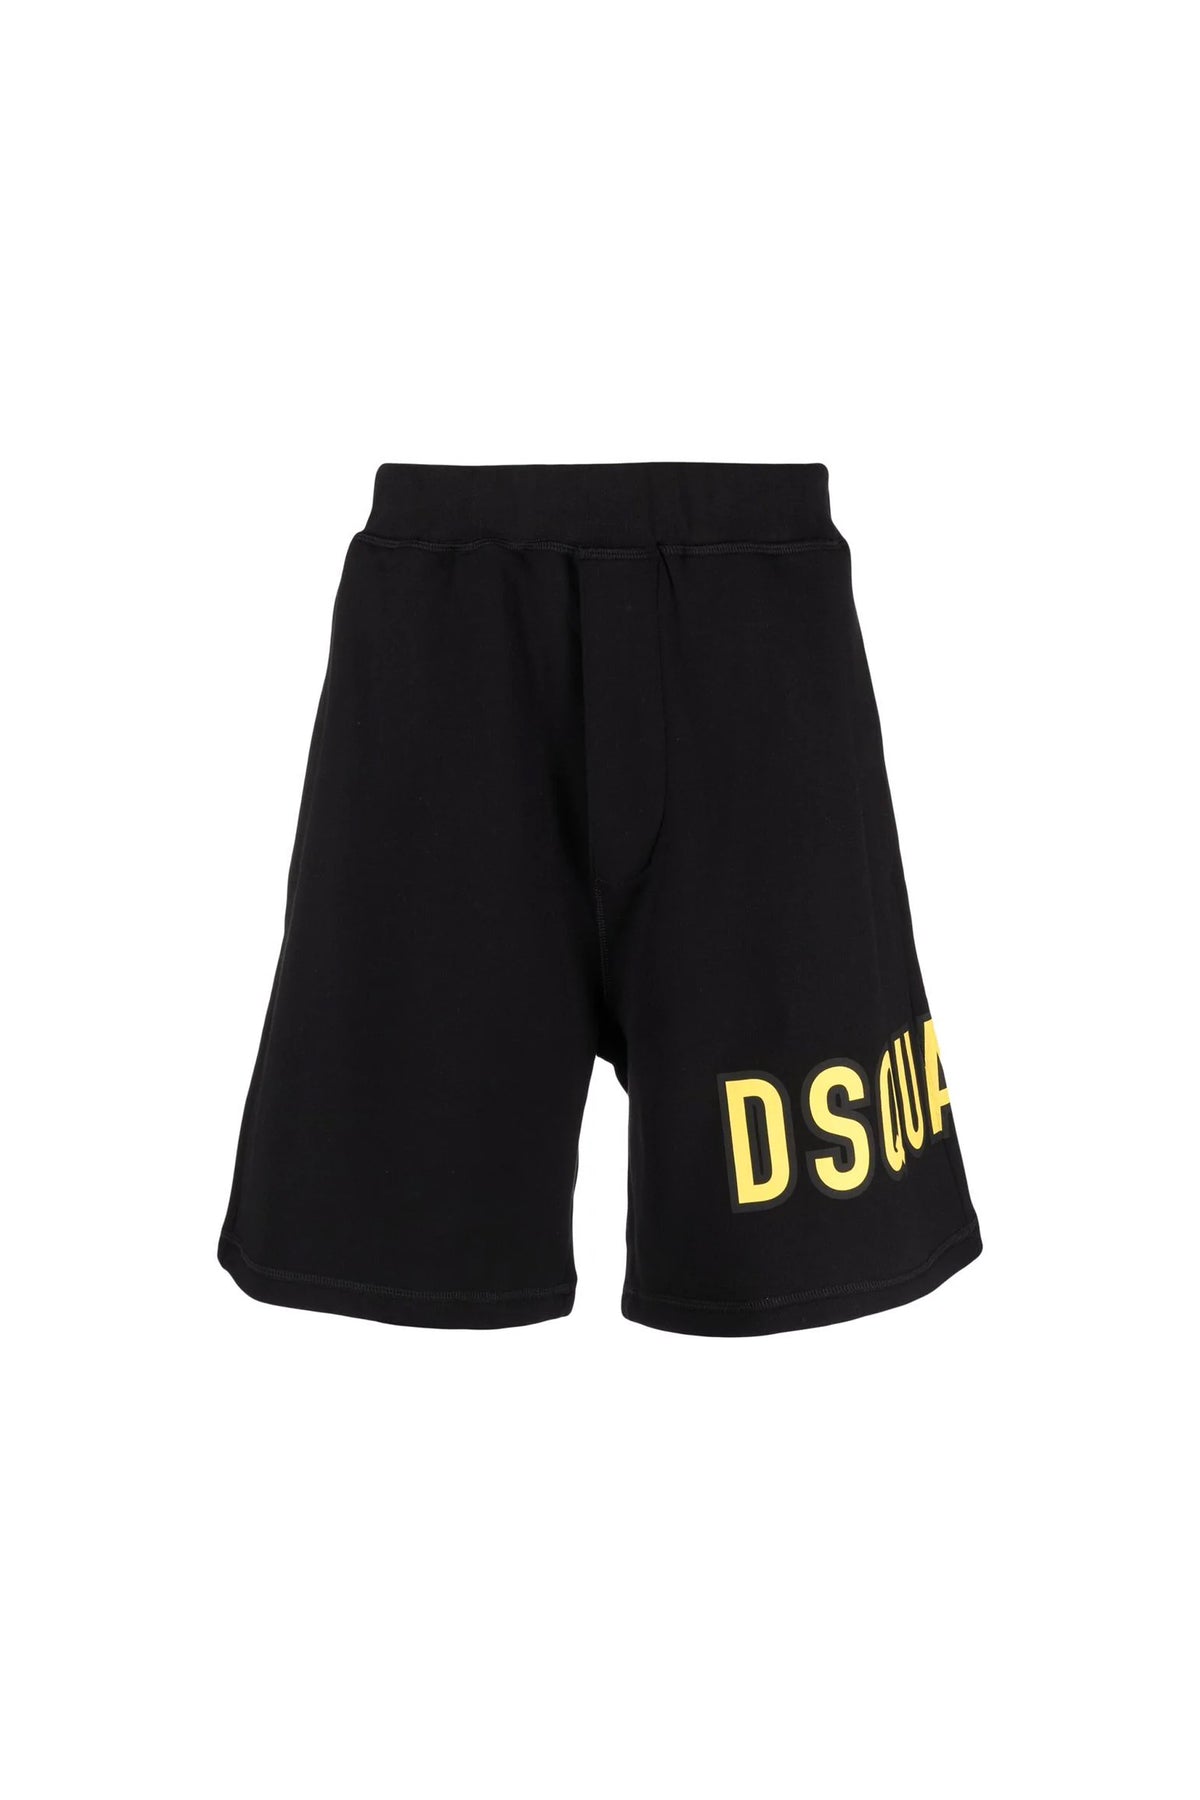 Dsquared2 logo-print cotton shorts